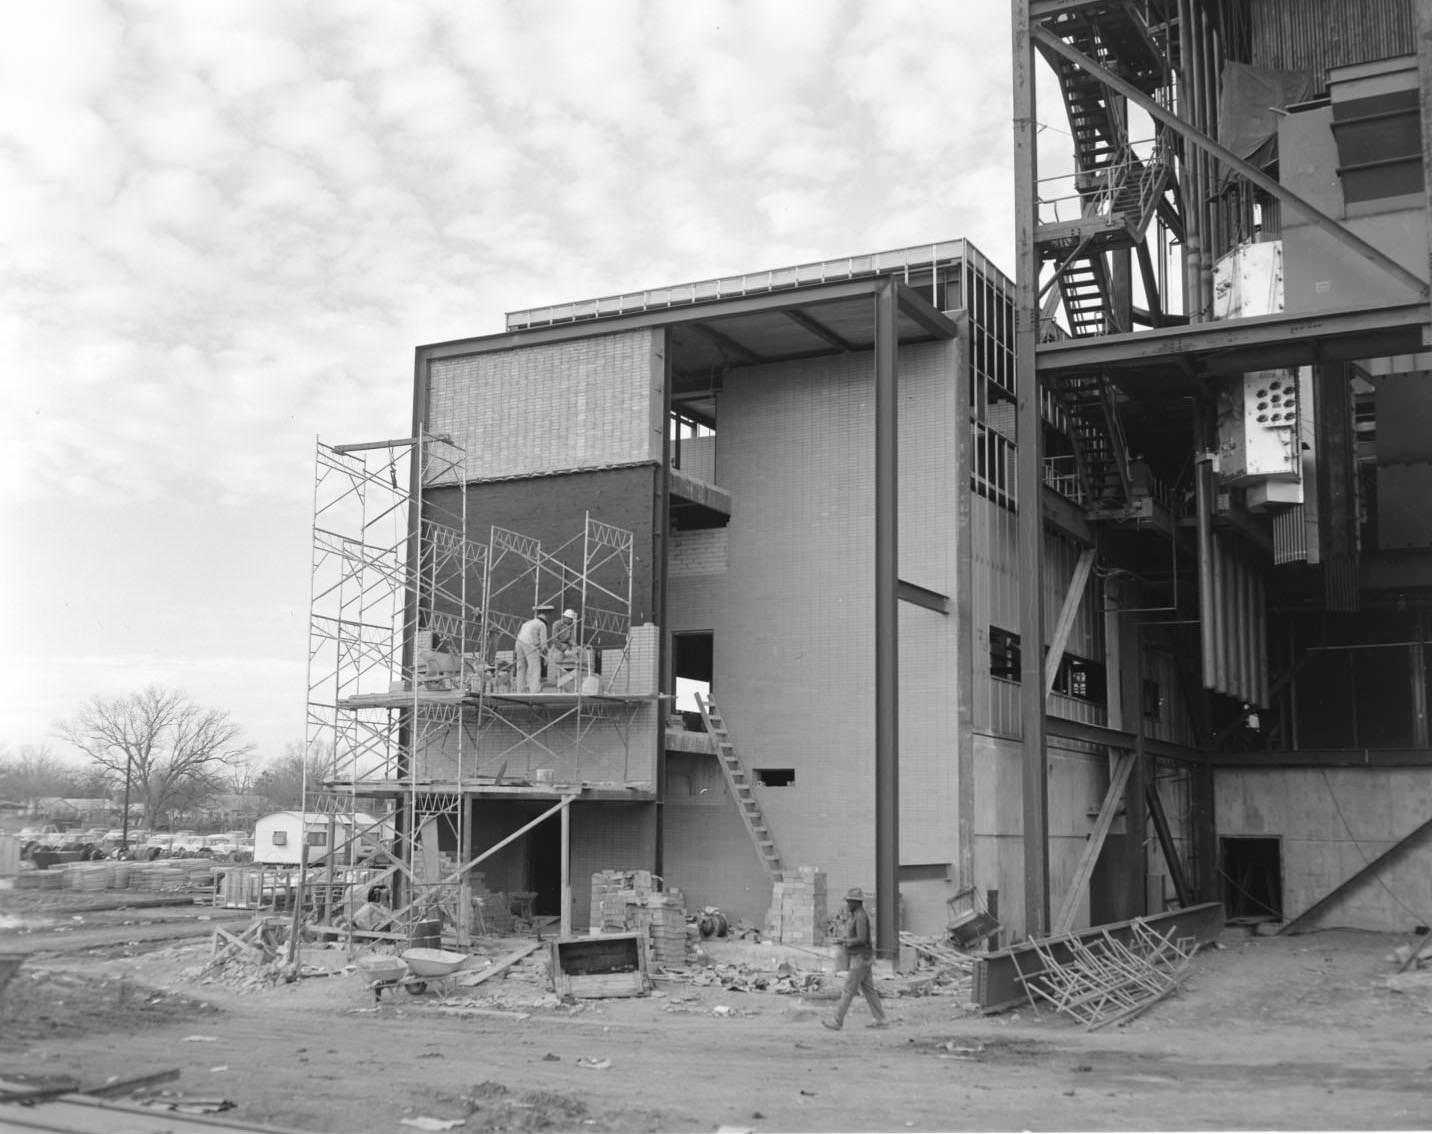 Construction on exterior of power plant power. Austin, Texas, 1960